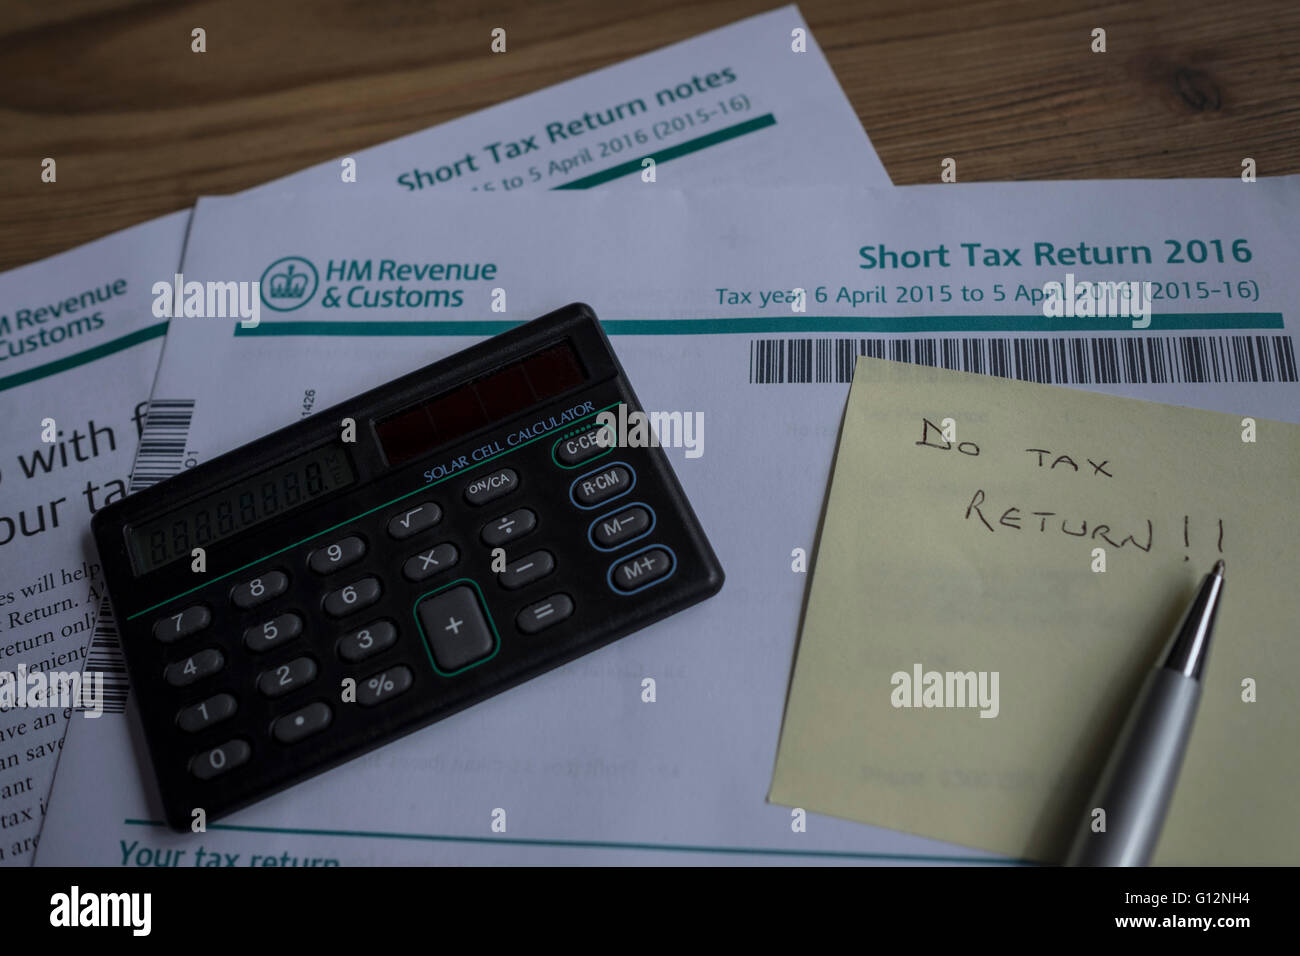 uk-tax-return-2016-stock-photo-alamy